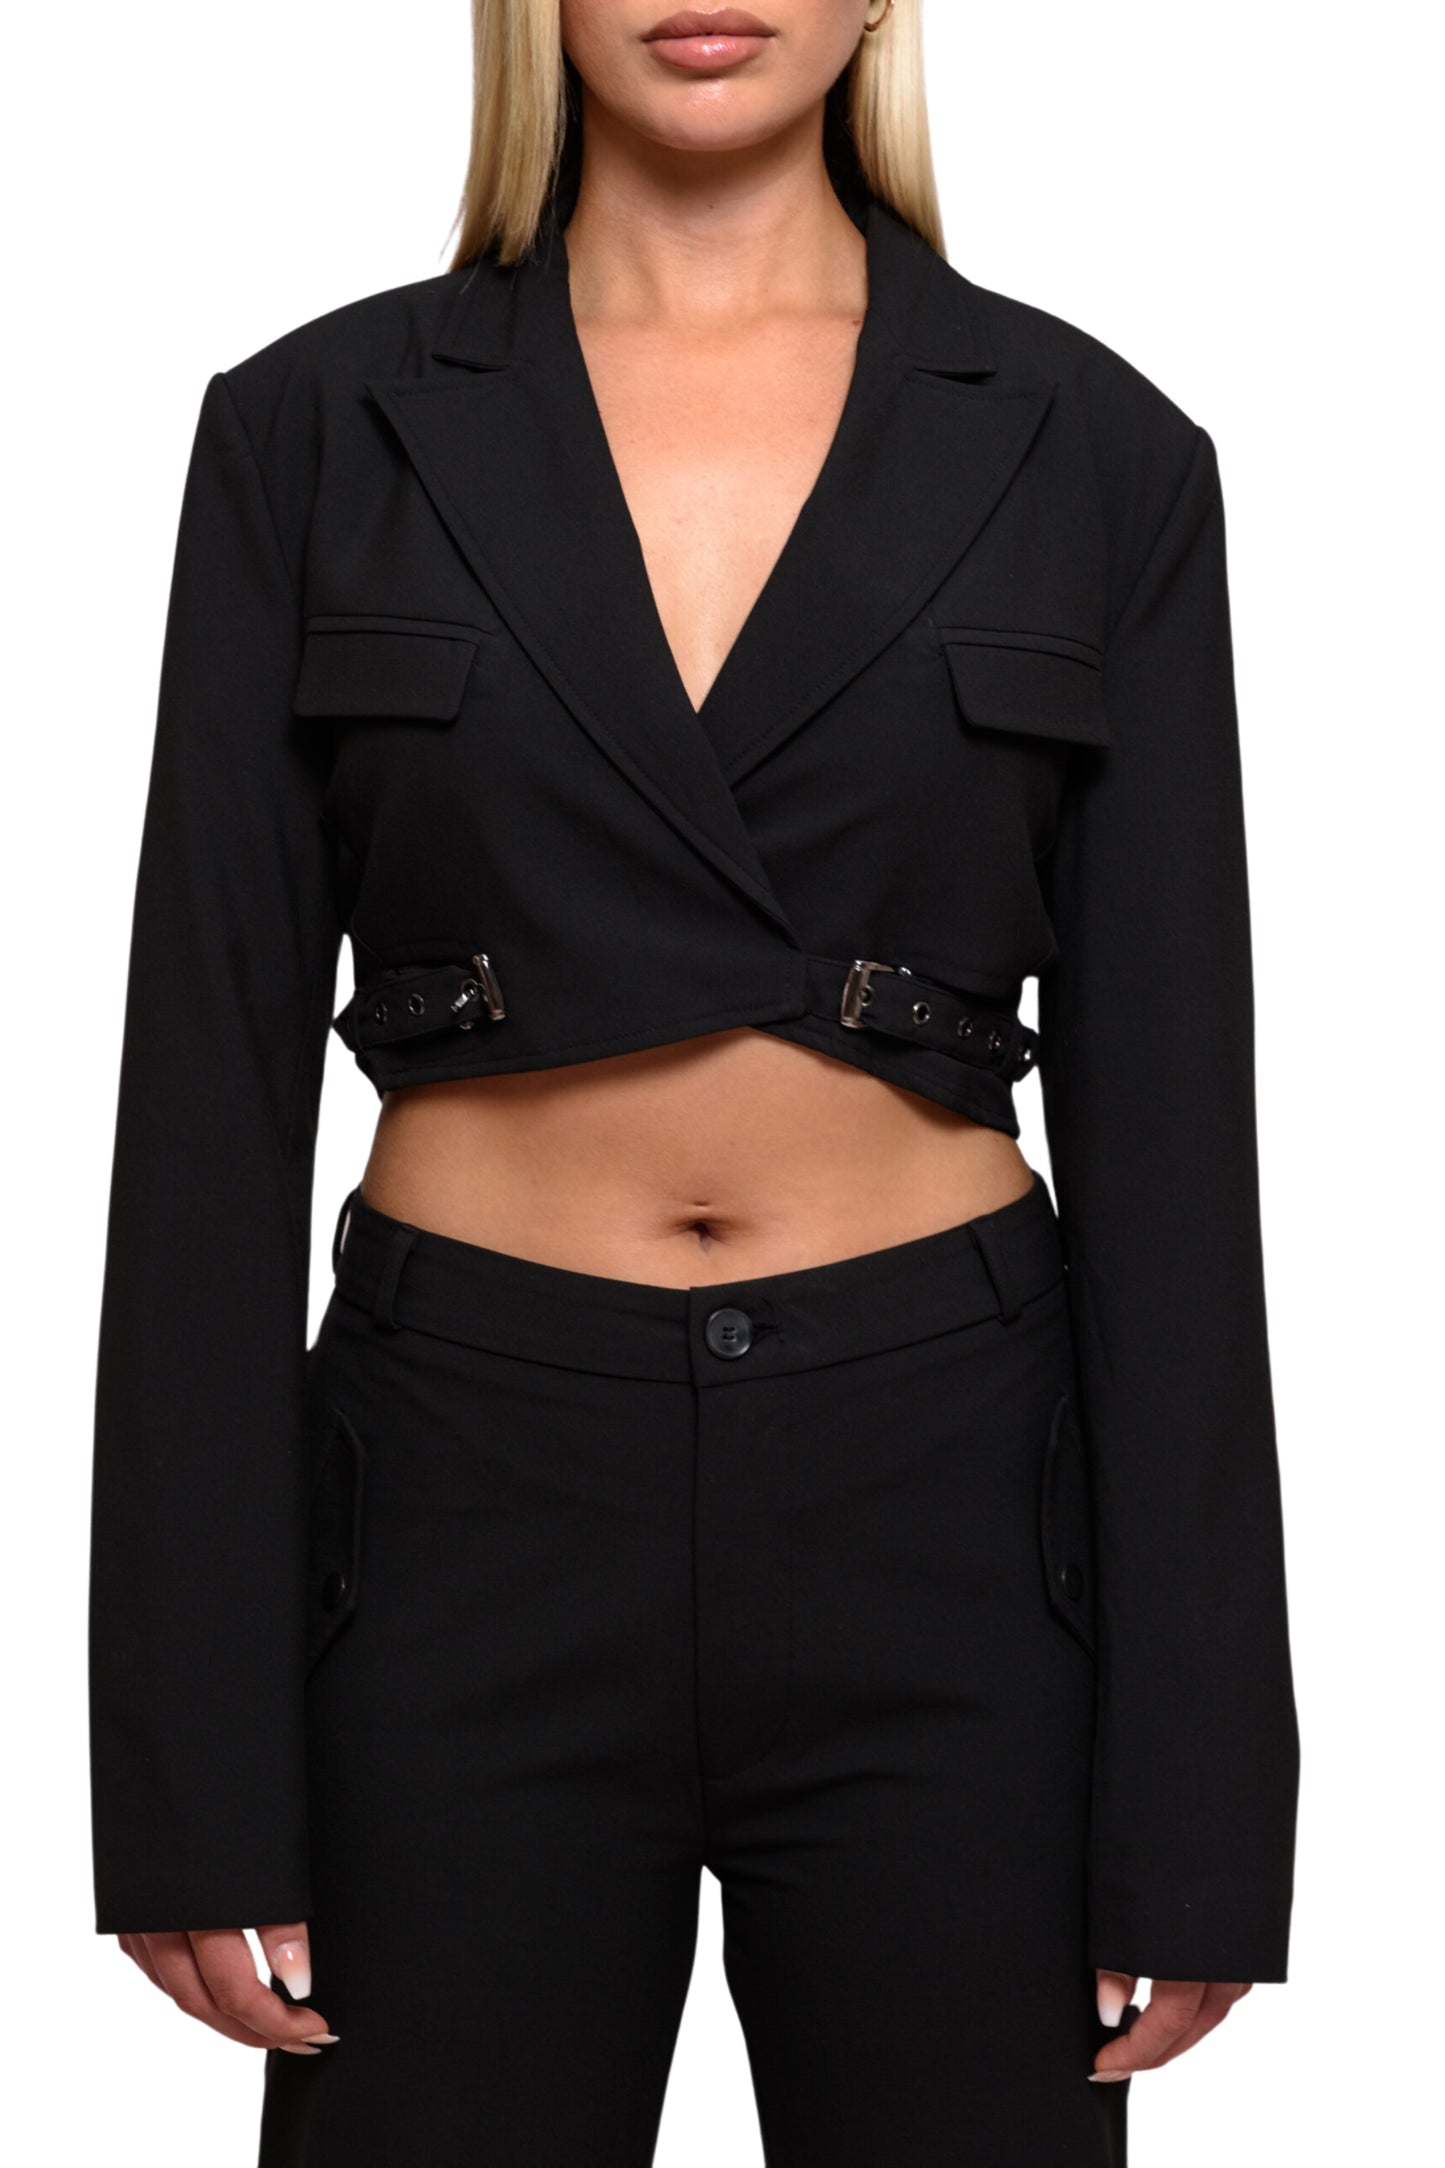 model posing with black cropped blazer